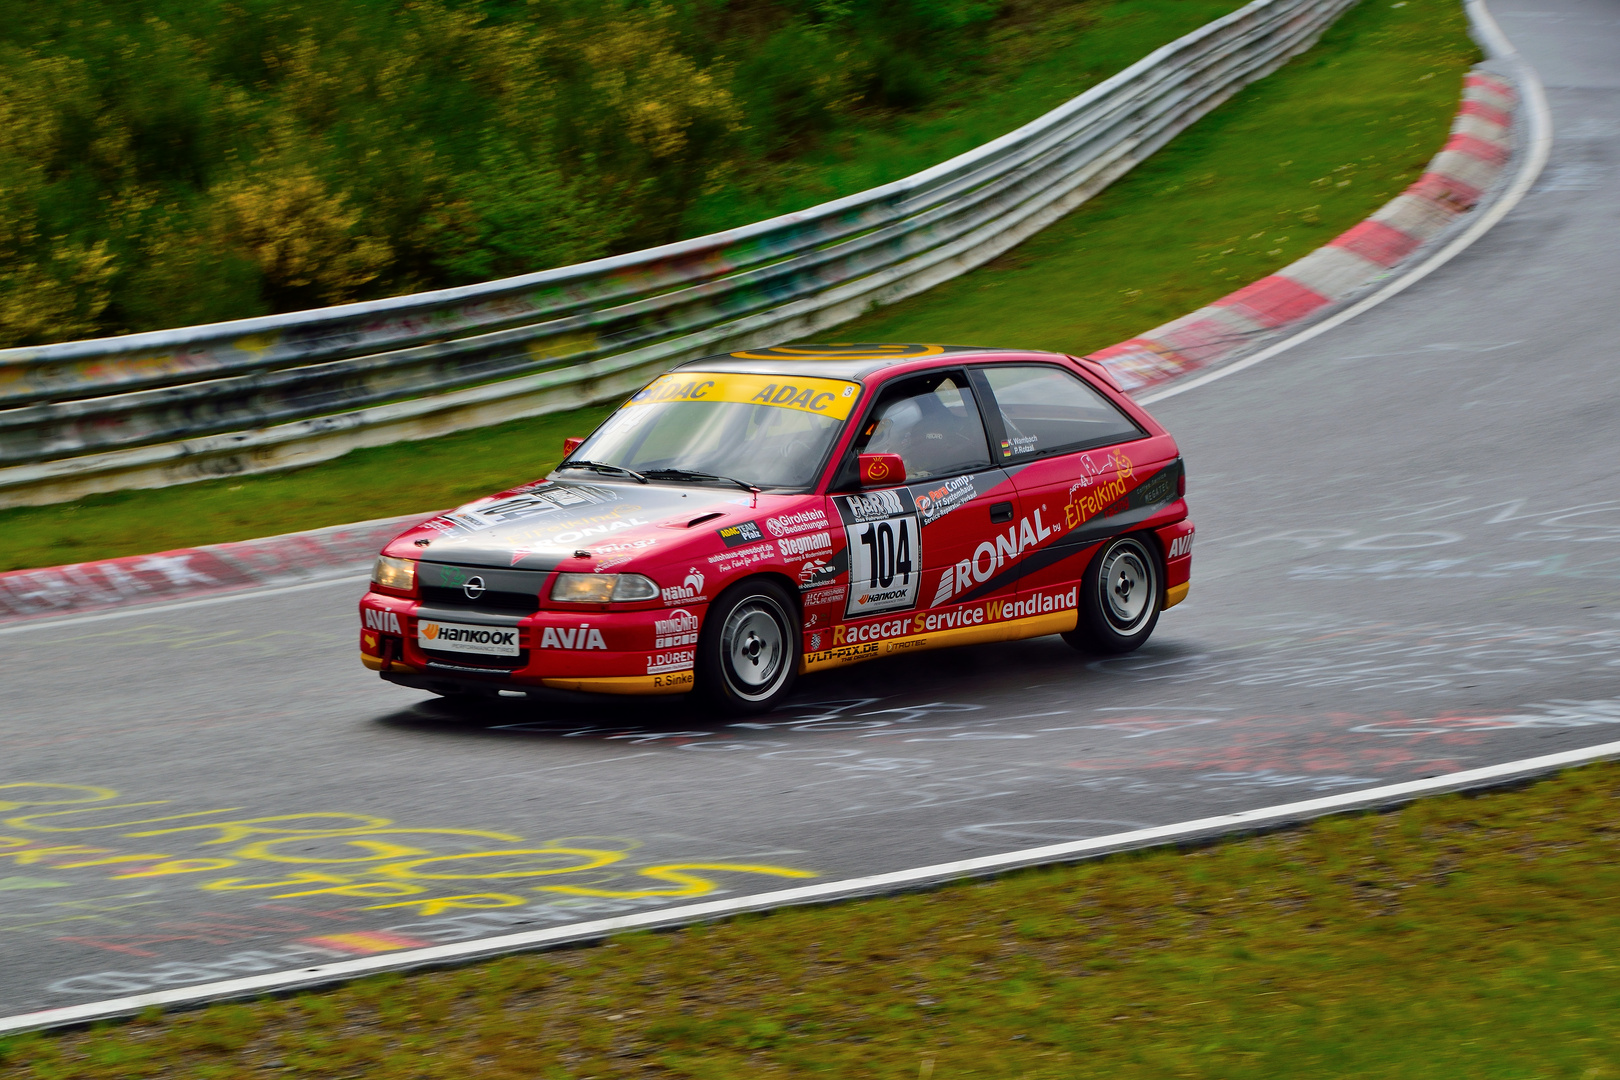 RCN # 104 - Opel Astra GSI 16V 'Ronal racing by EiFelkind racing'